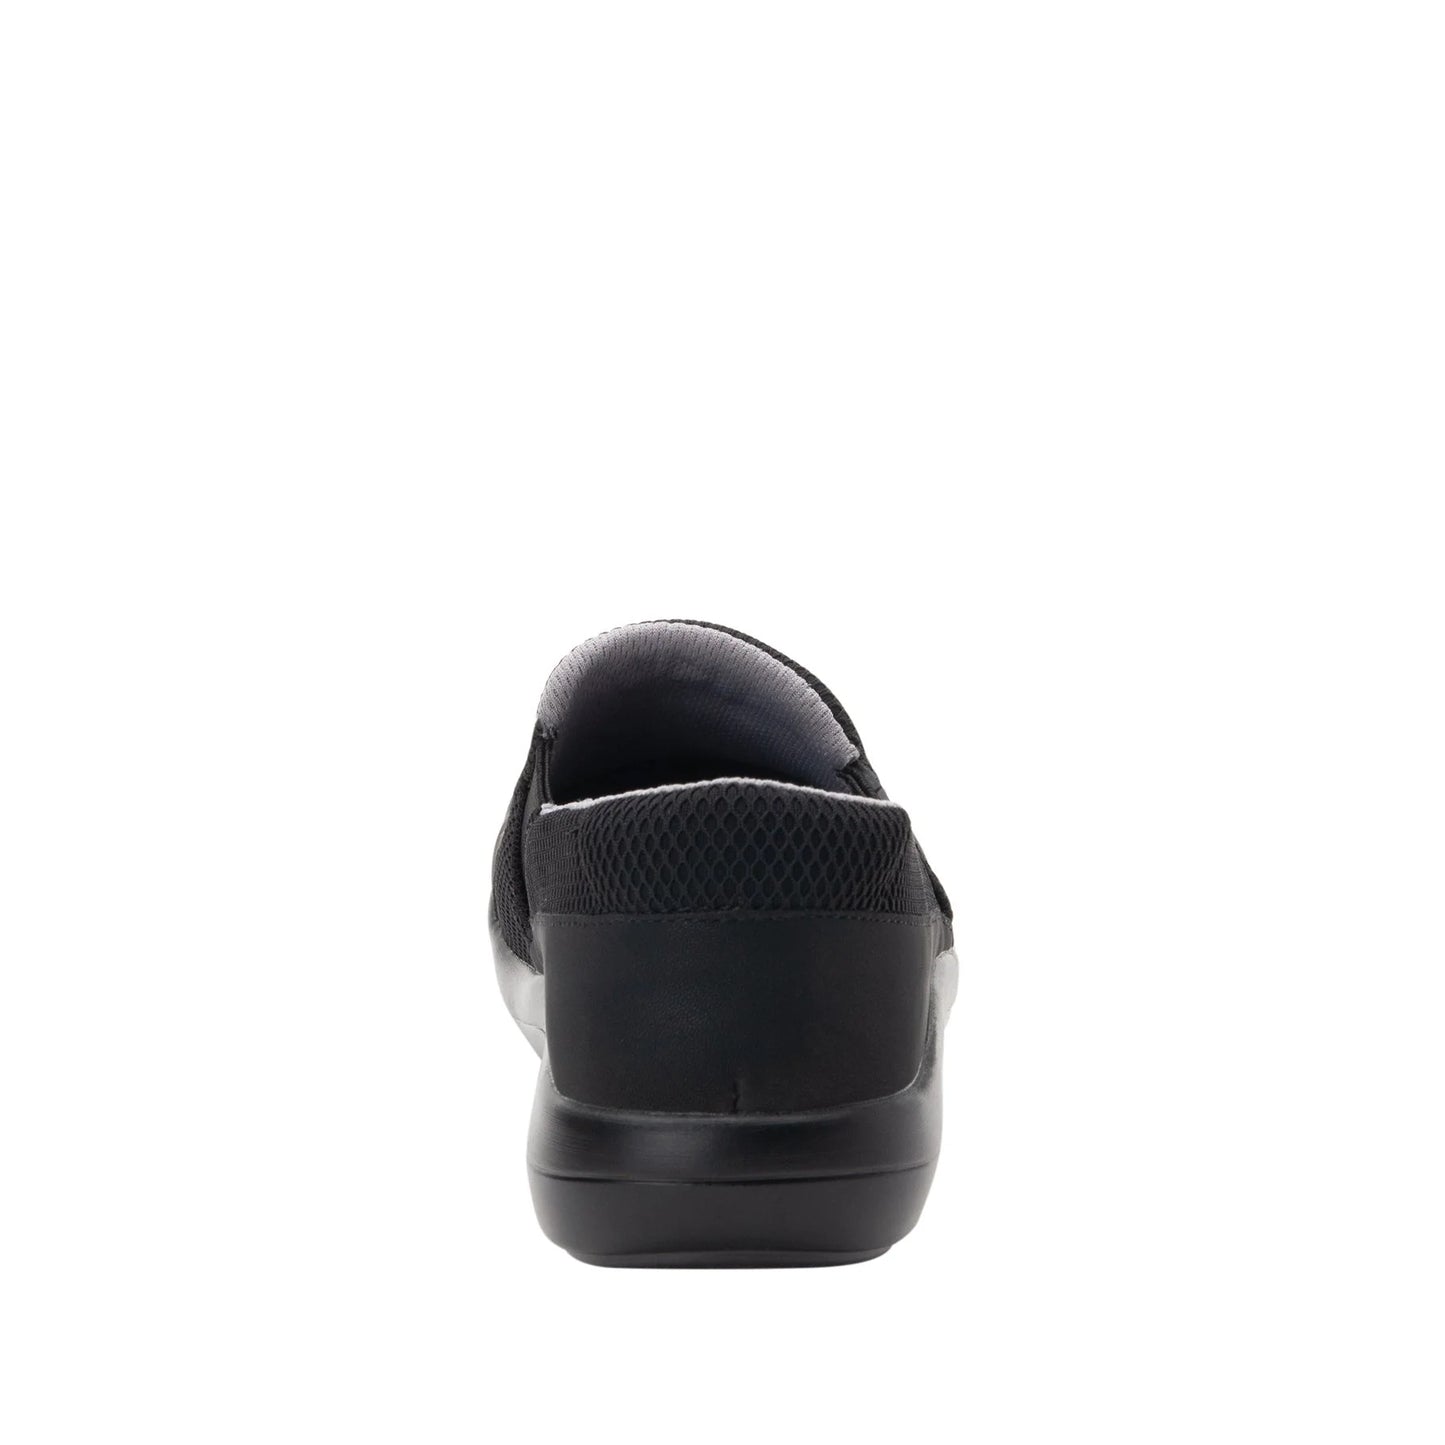 Alegria Women's Duette Slip Resistant Shoe - Black